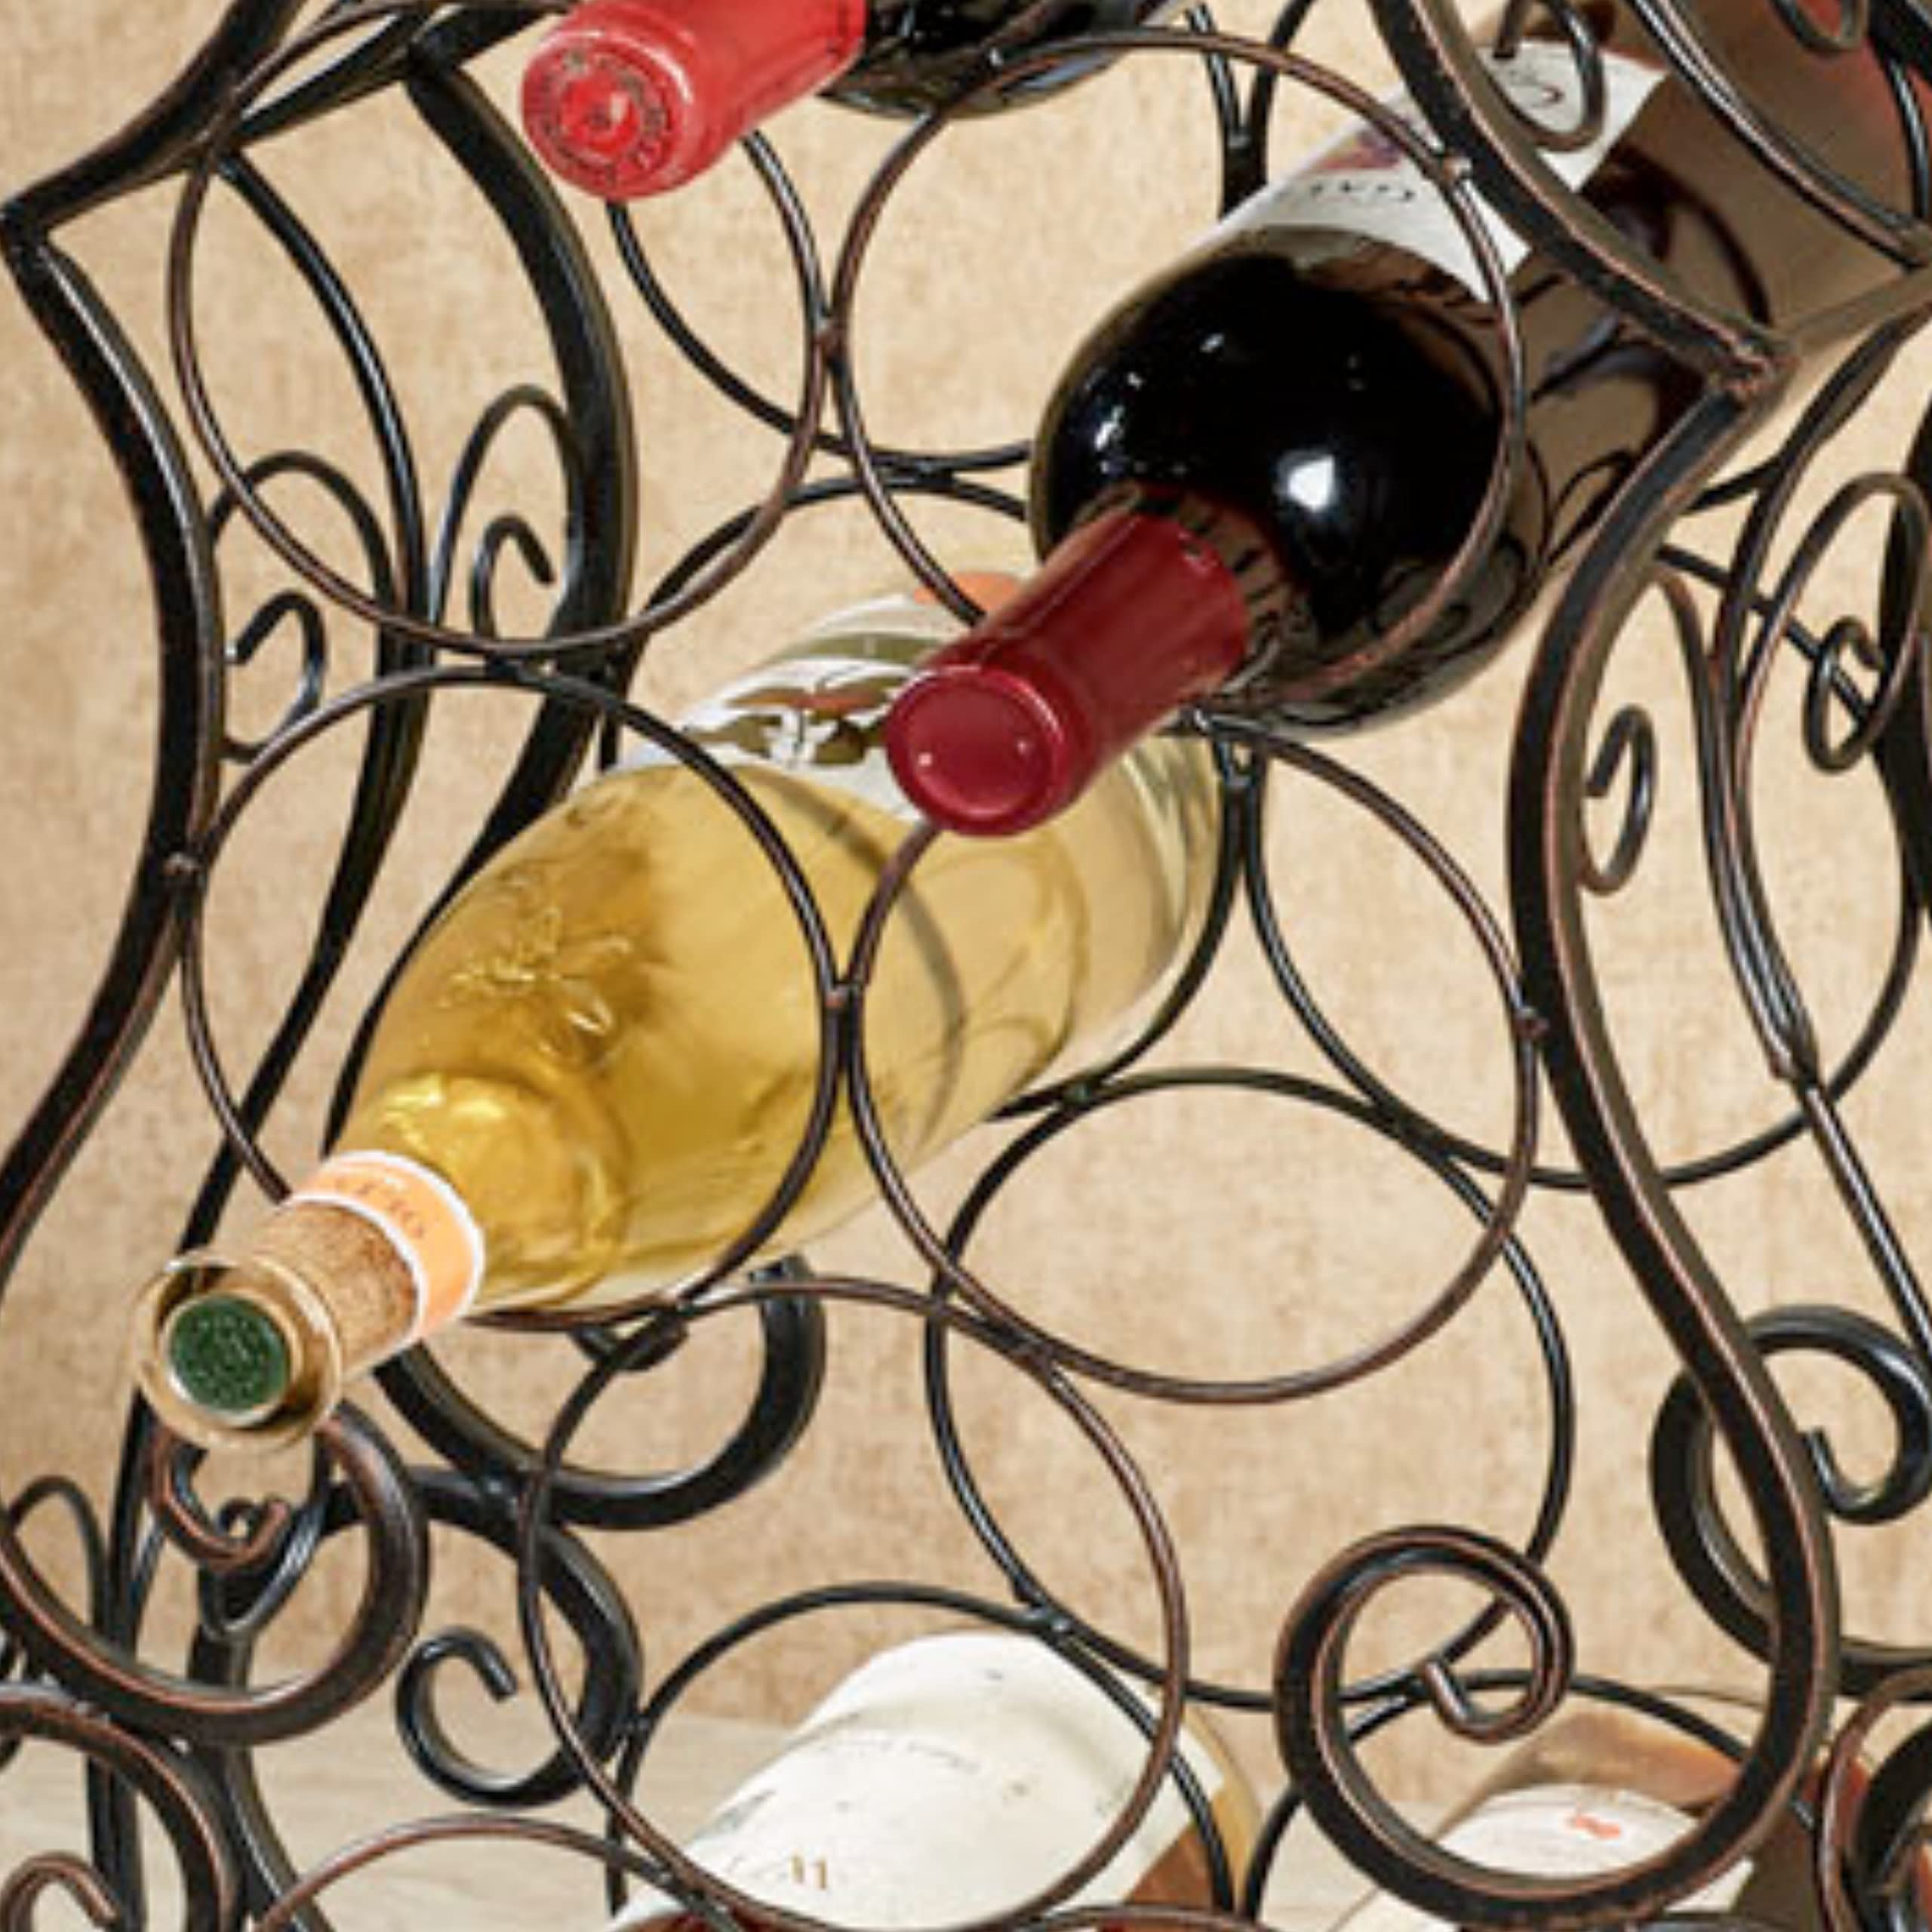 Touch of Class Pisa Countertop Metal Wine Rack Black Bronze | Storage Holder up to Eight Bottles | Tabletop Winerack Organizer with Scrolling Openwork Designs